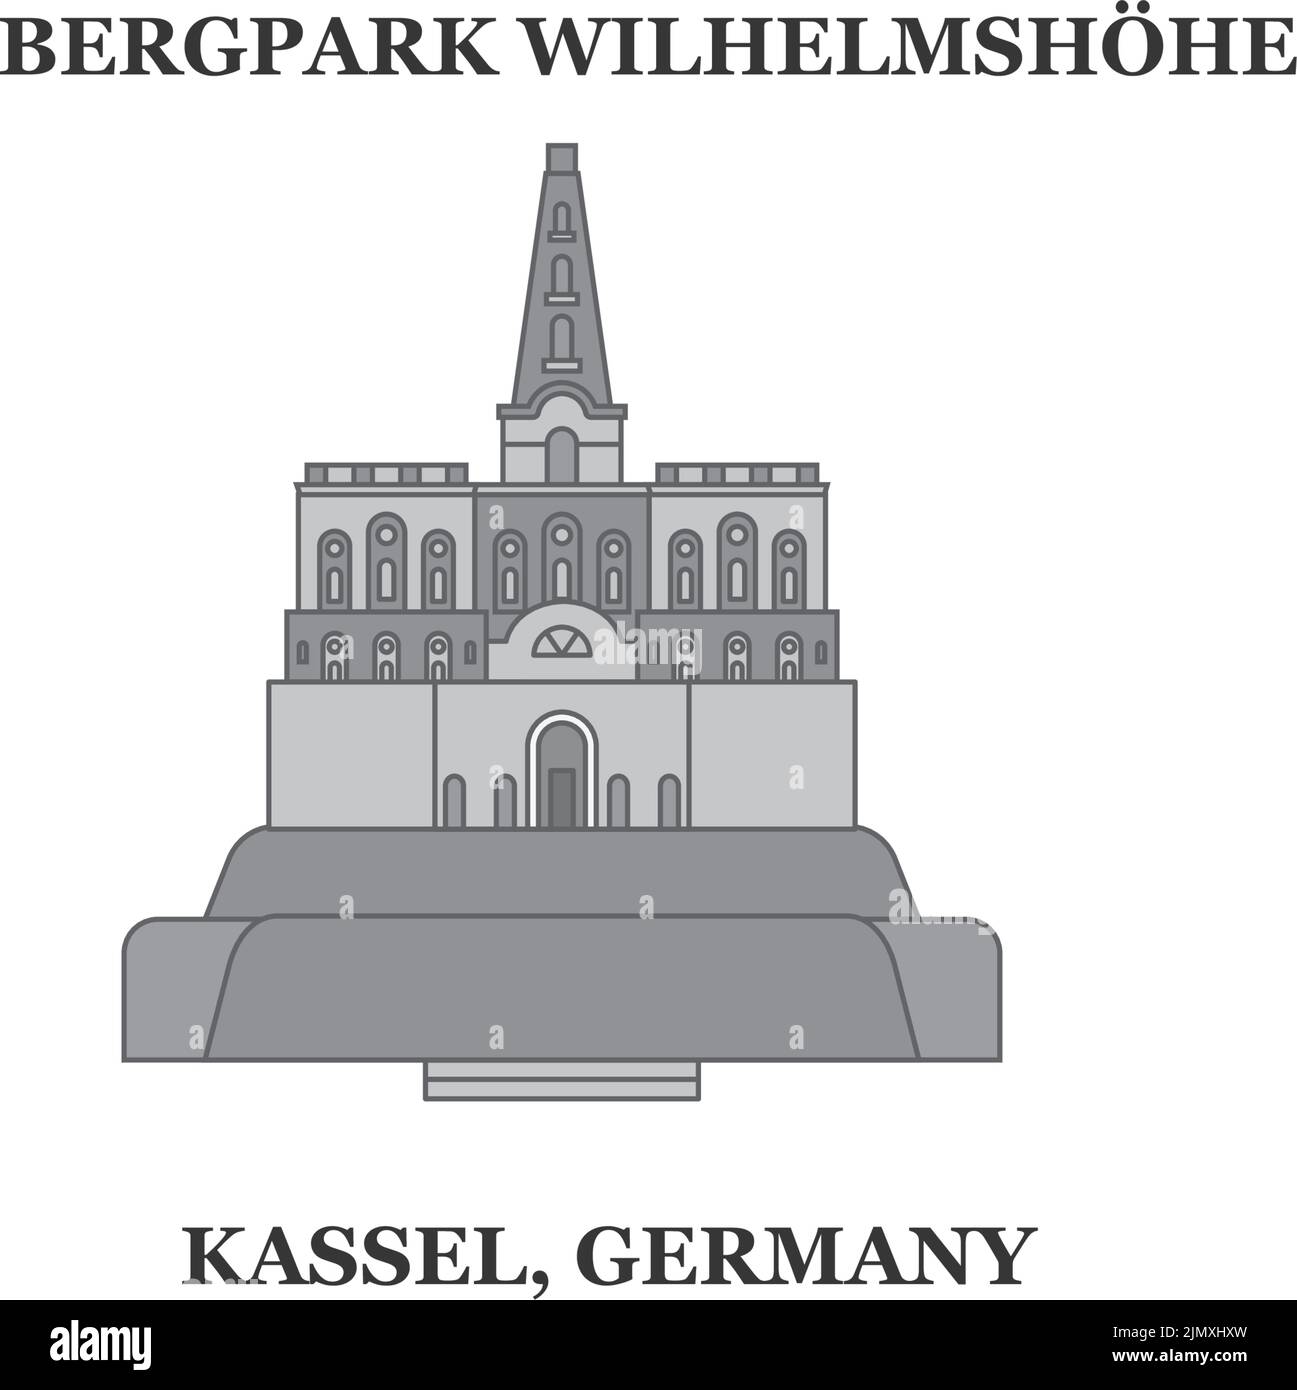 Germany, Kassel, Bergpark Wilhelmshohe city skyline isolated vector illustration, icons Stock Vector